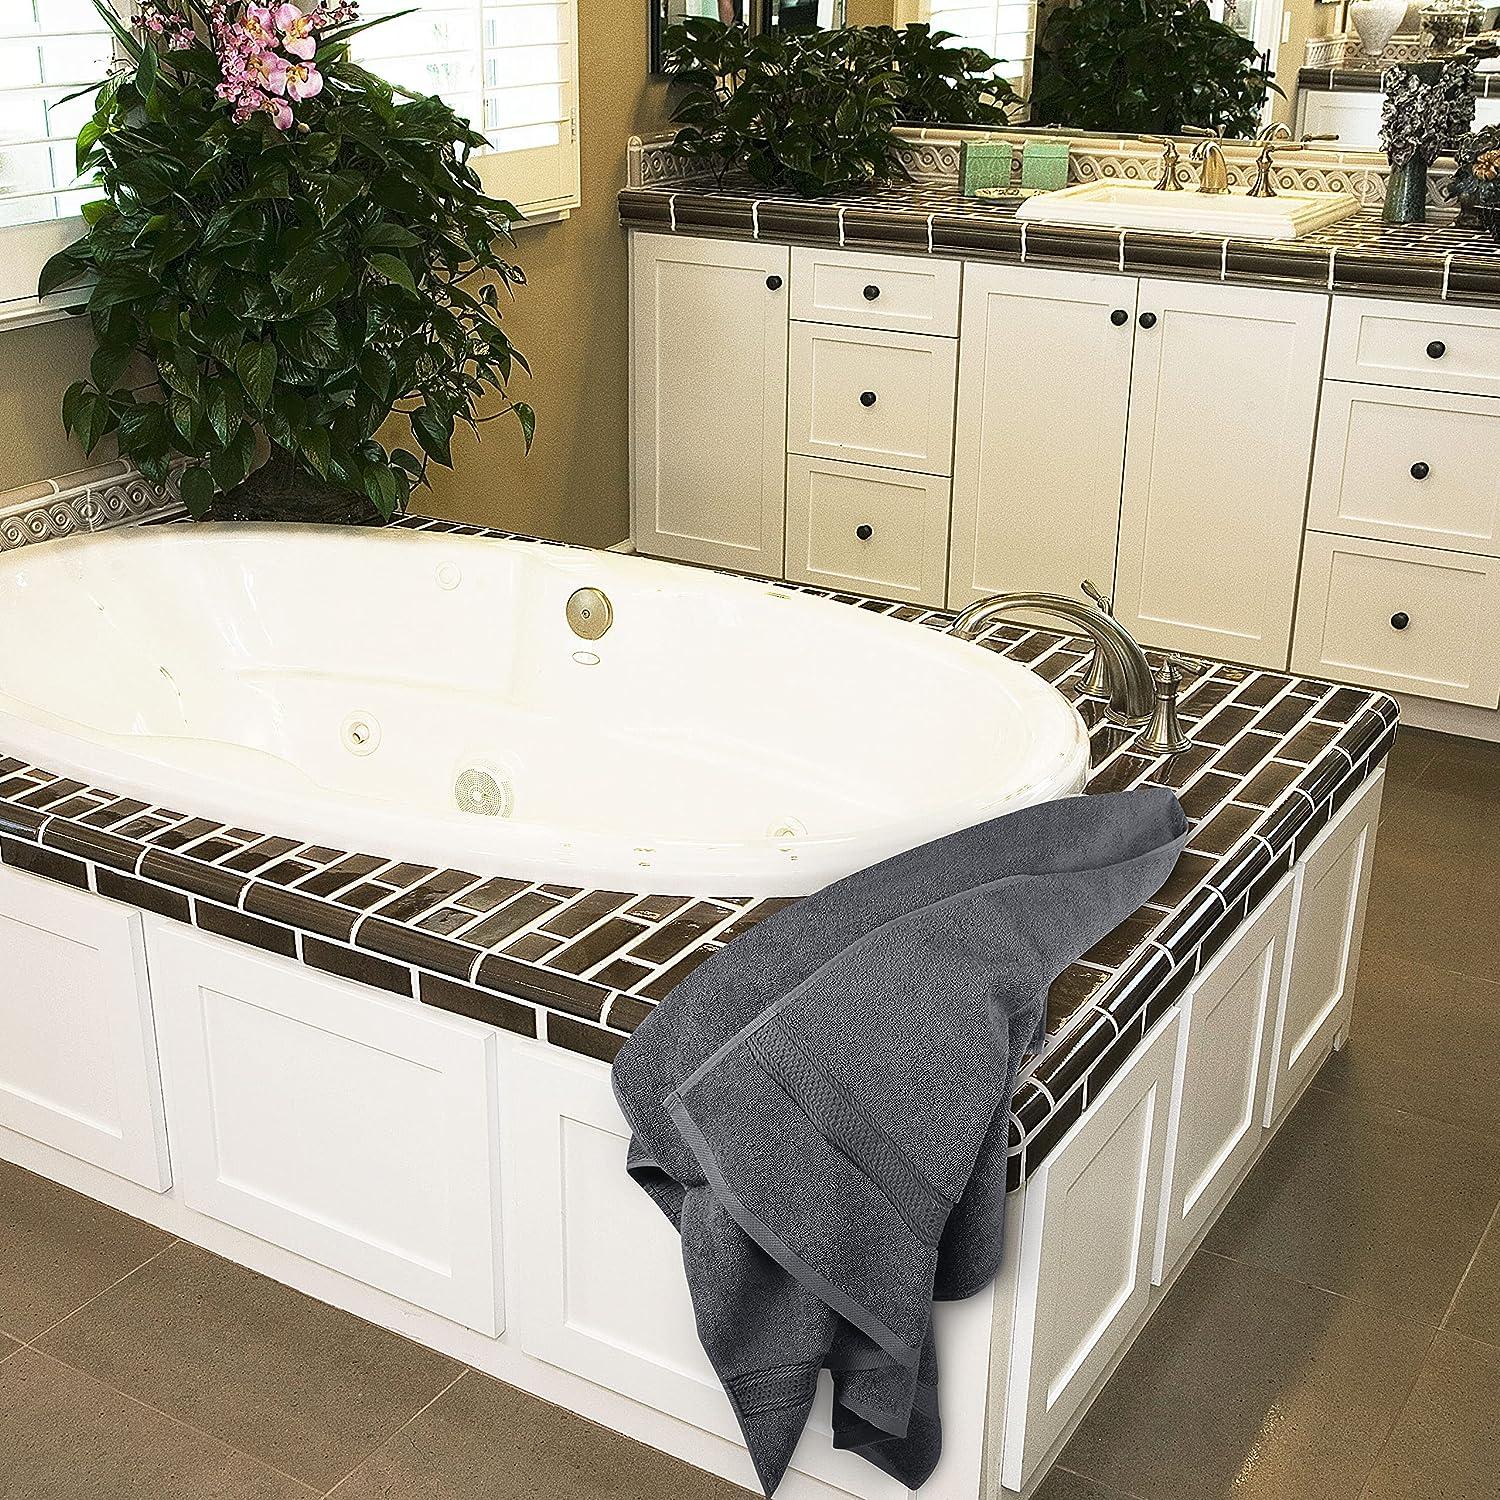 Utopia Towels - Bath Towels Set, Grey - Premium 600 GSM 100% Ring Spun  Cotton 